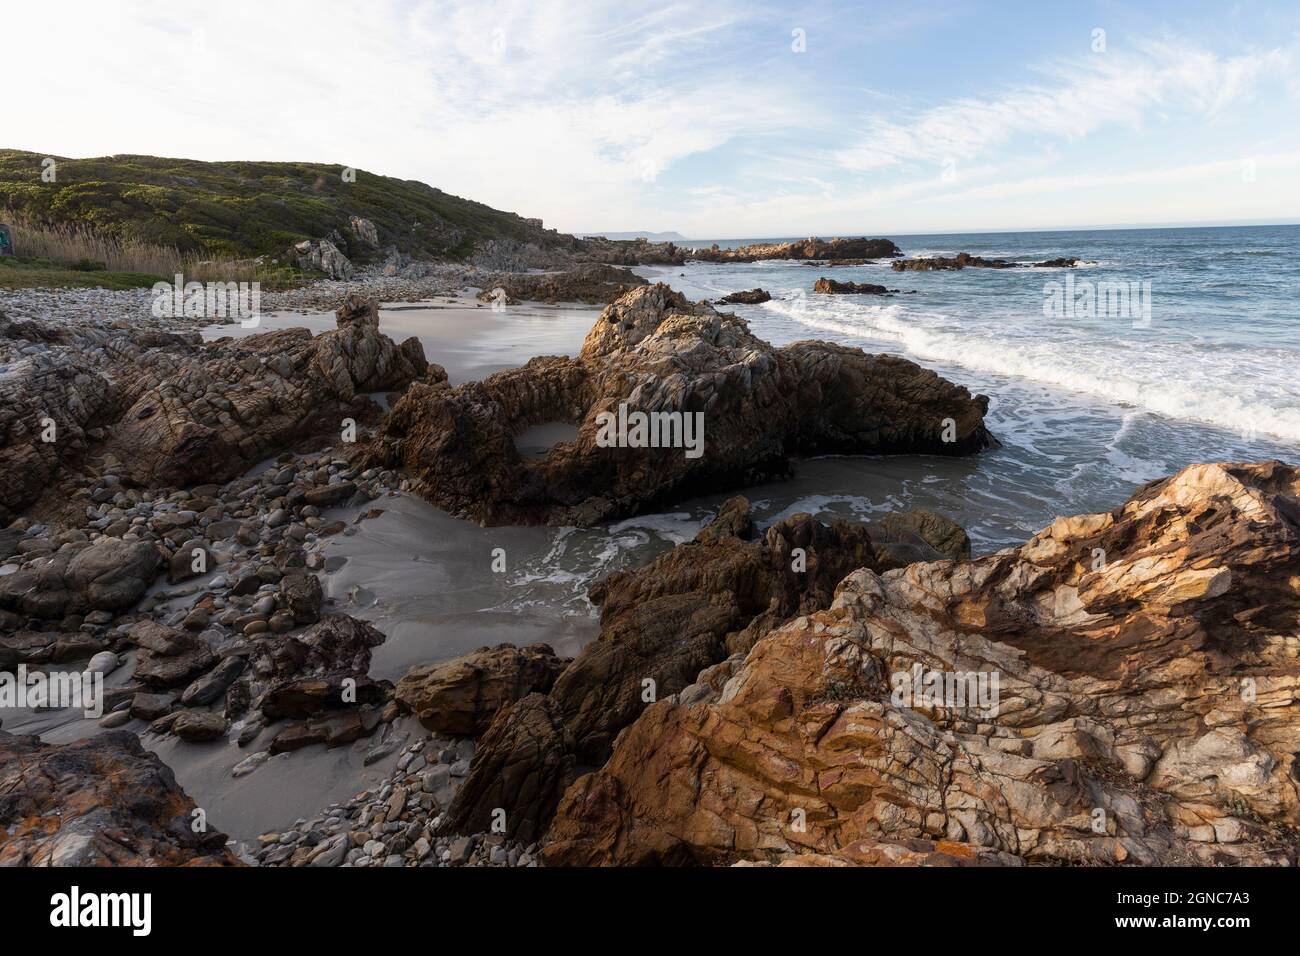 A deserted beach, jagged rocks and rockpools on the Atlantic coast. Stock Photo